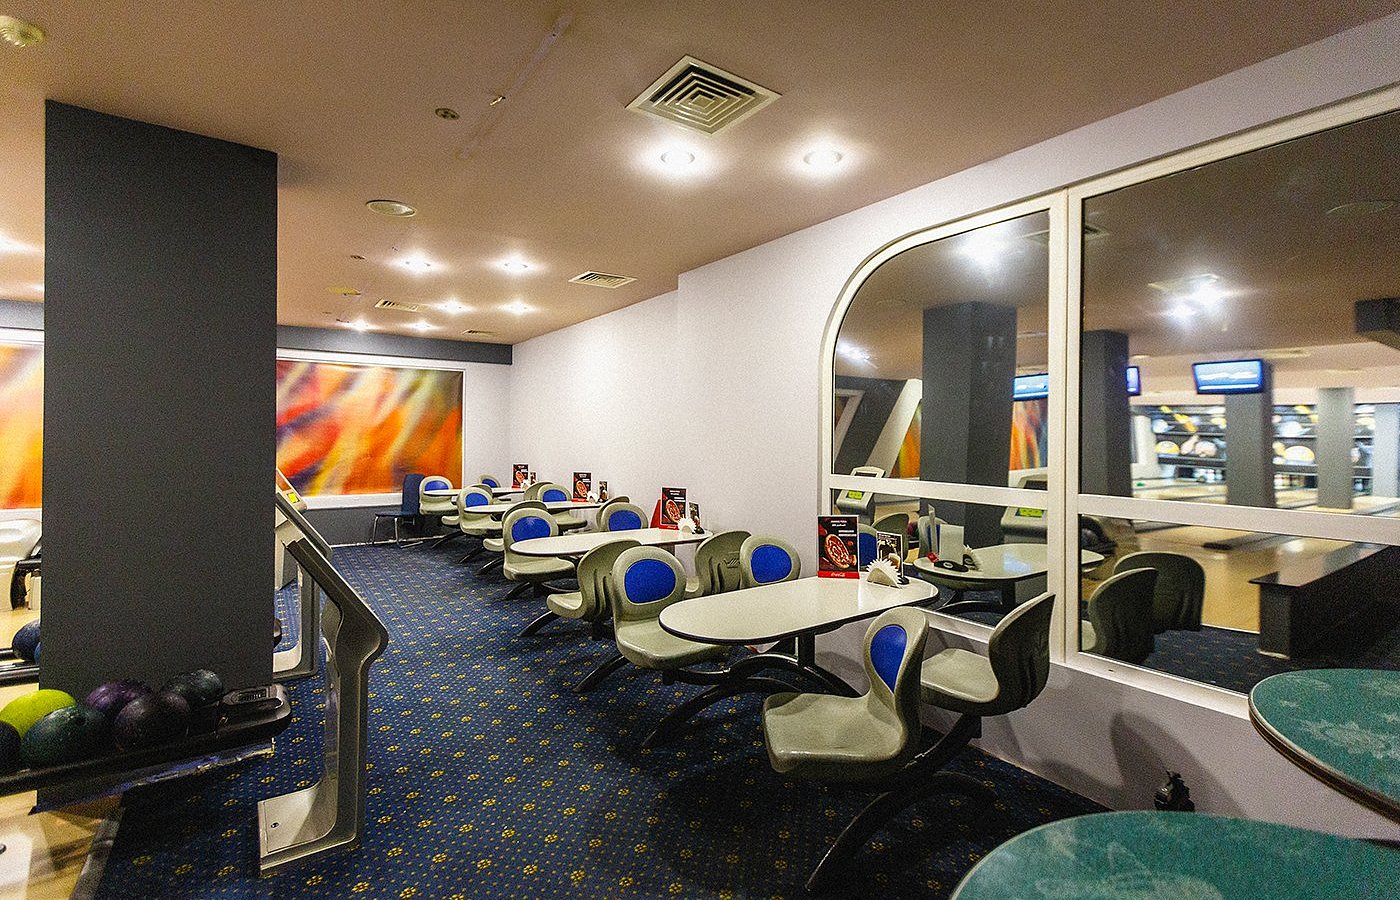 AMAX Park Hotel, Entertainment center "OUT-HALL", Restaurant "Evening Voronezh" image